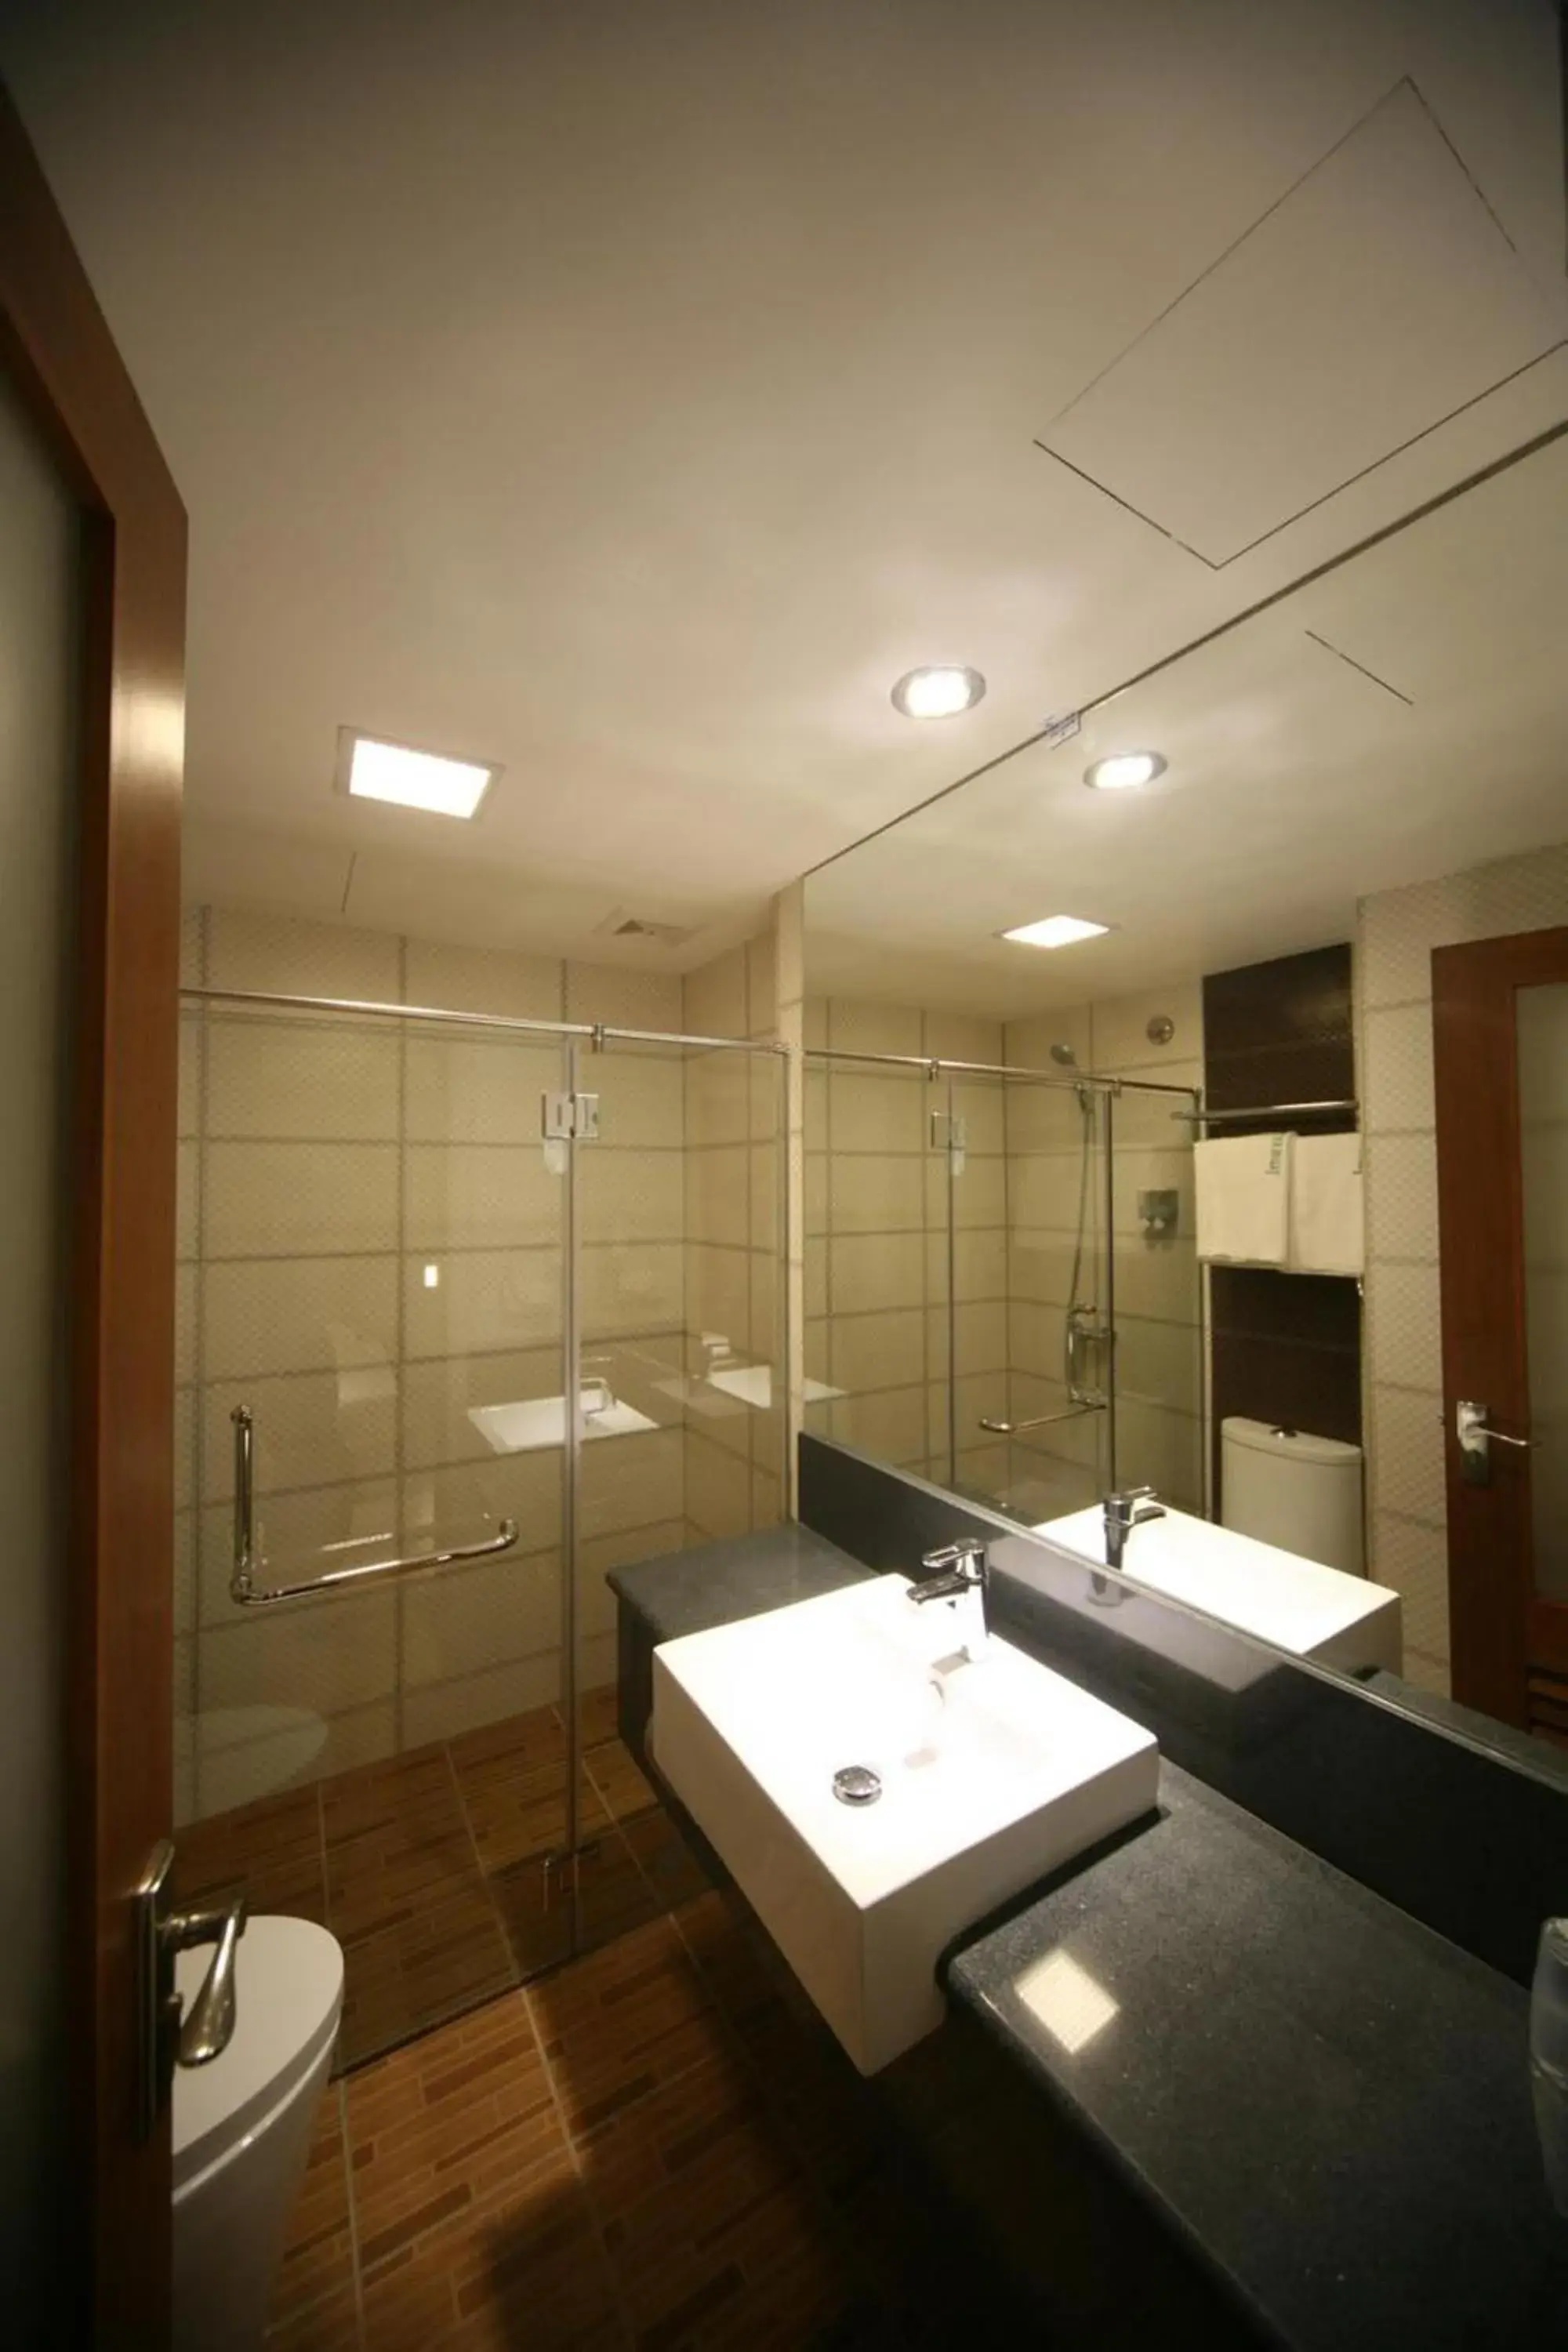 Bathroom in Cardogan Hotel